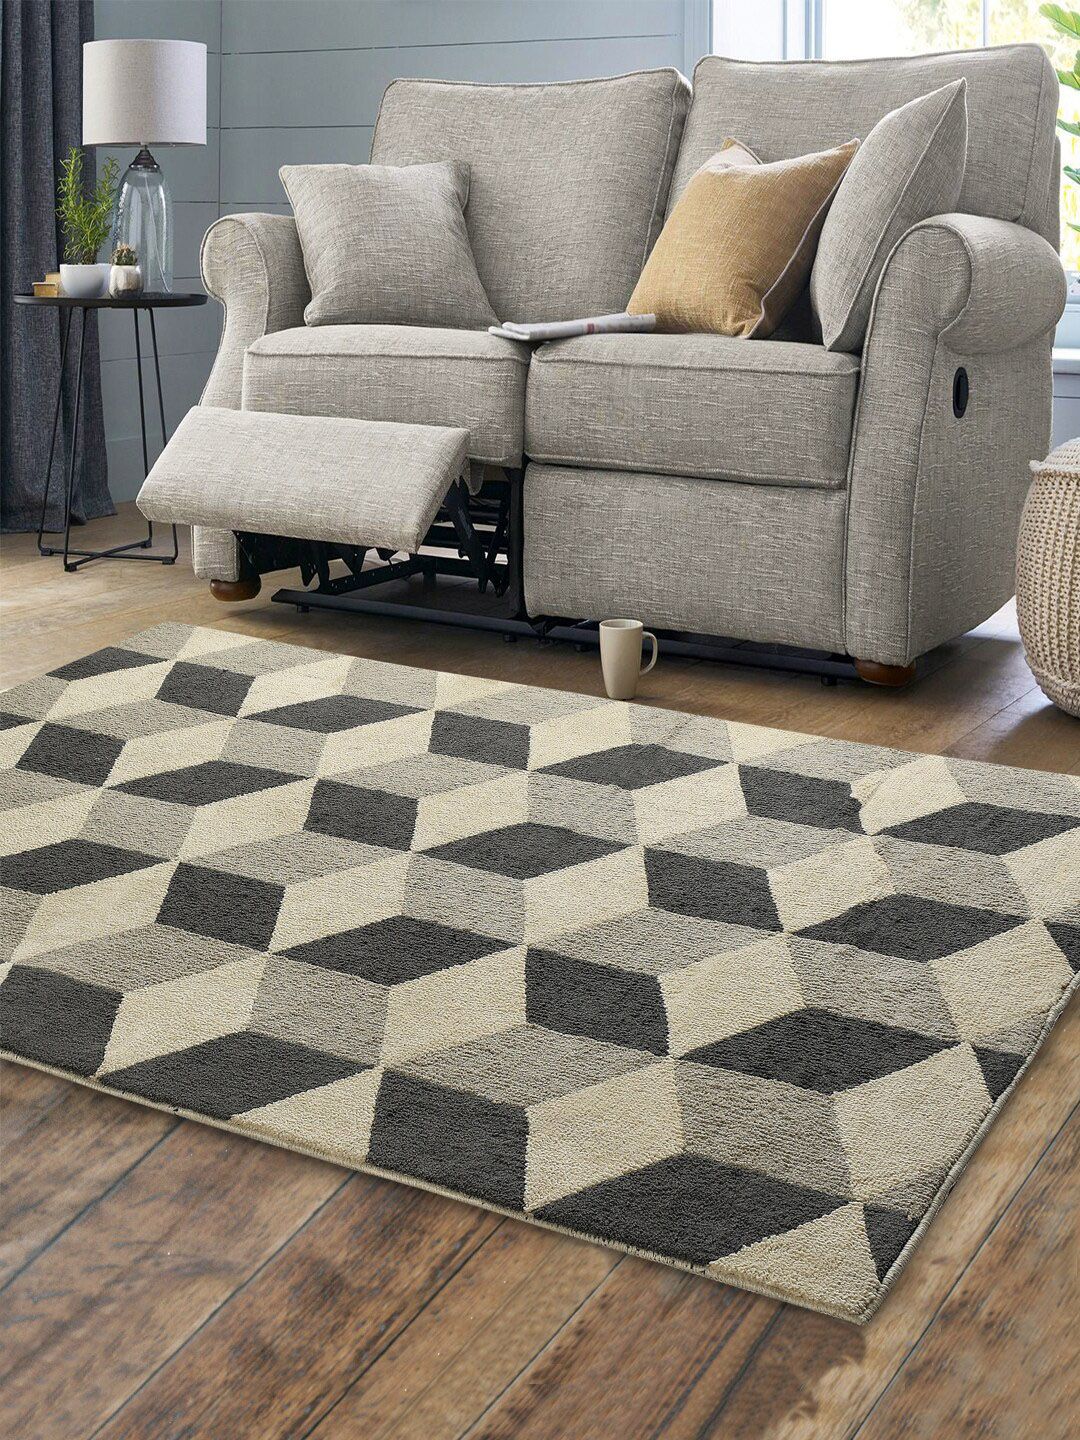 Saral Home Beige & Grey Geometric Print Floor Carpet Price in India